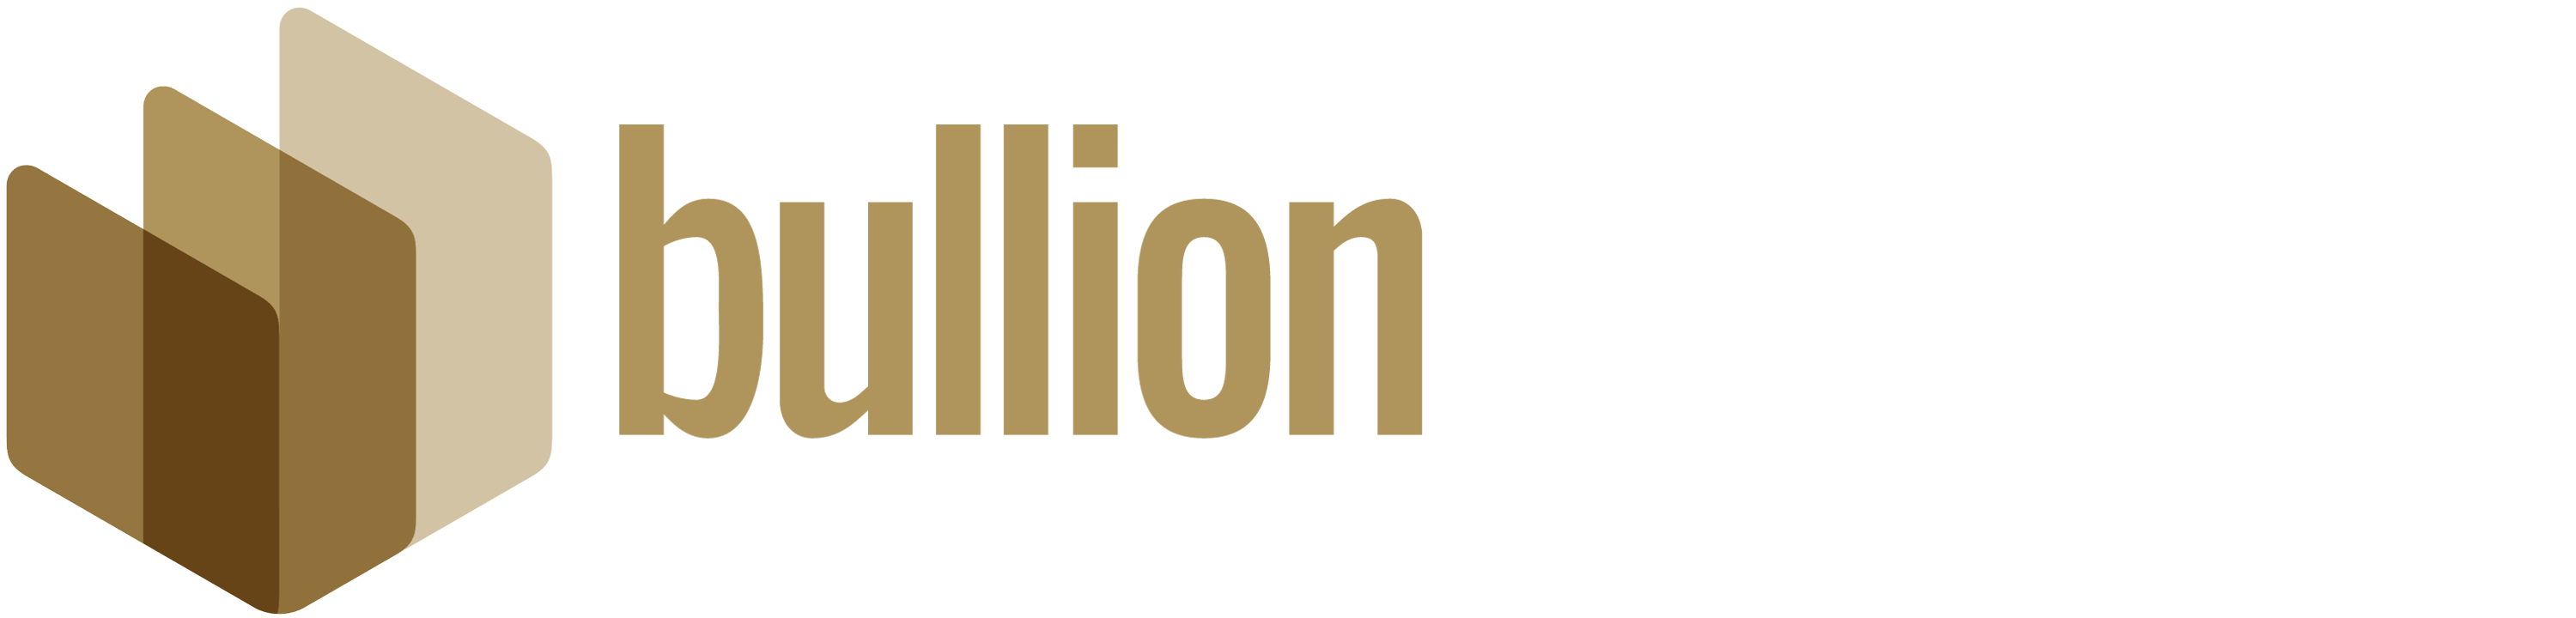 bullion directory logo